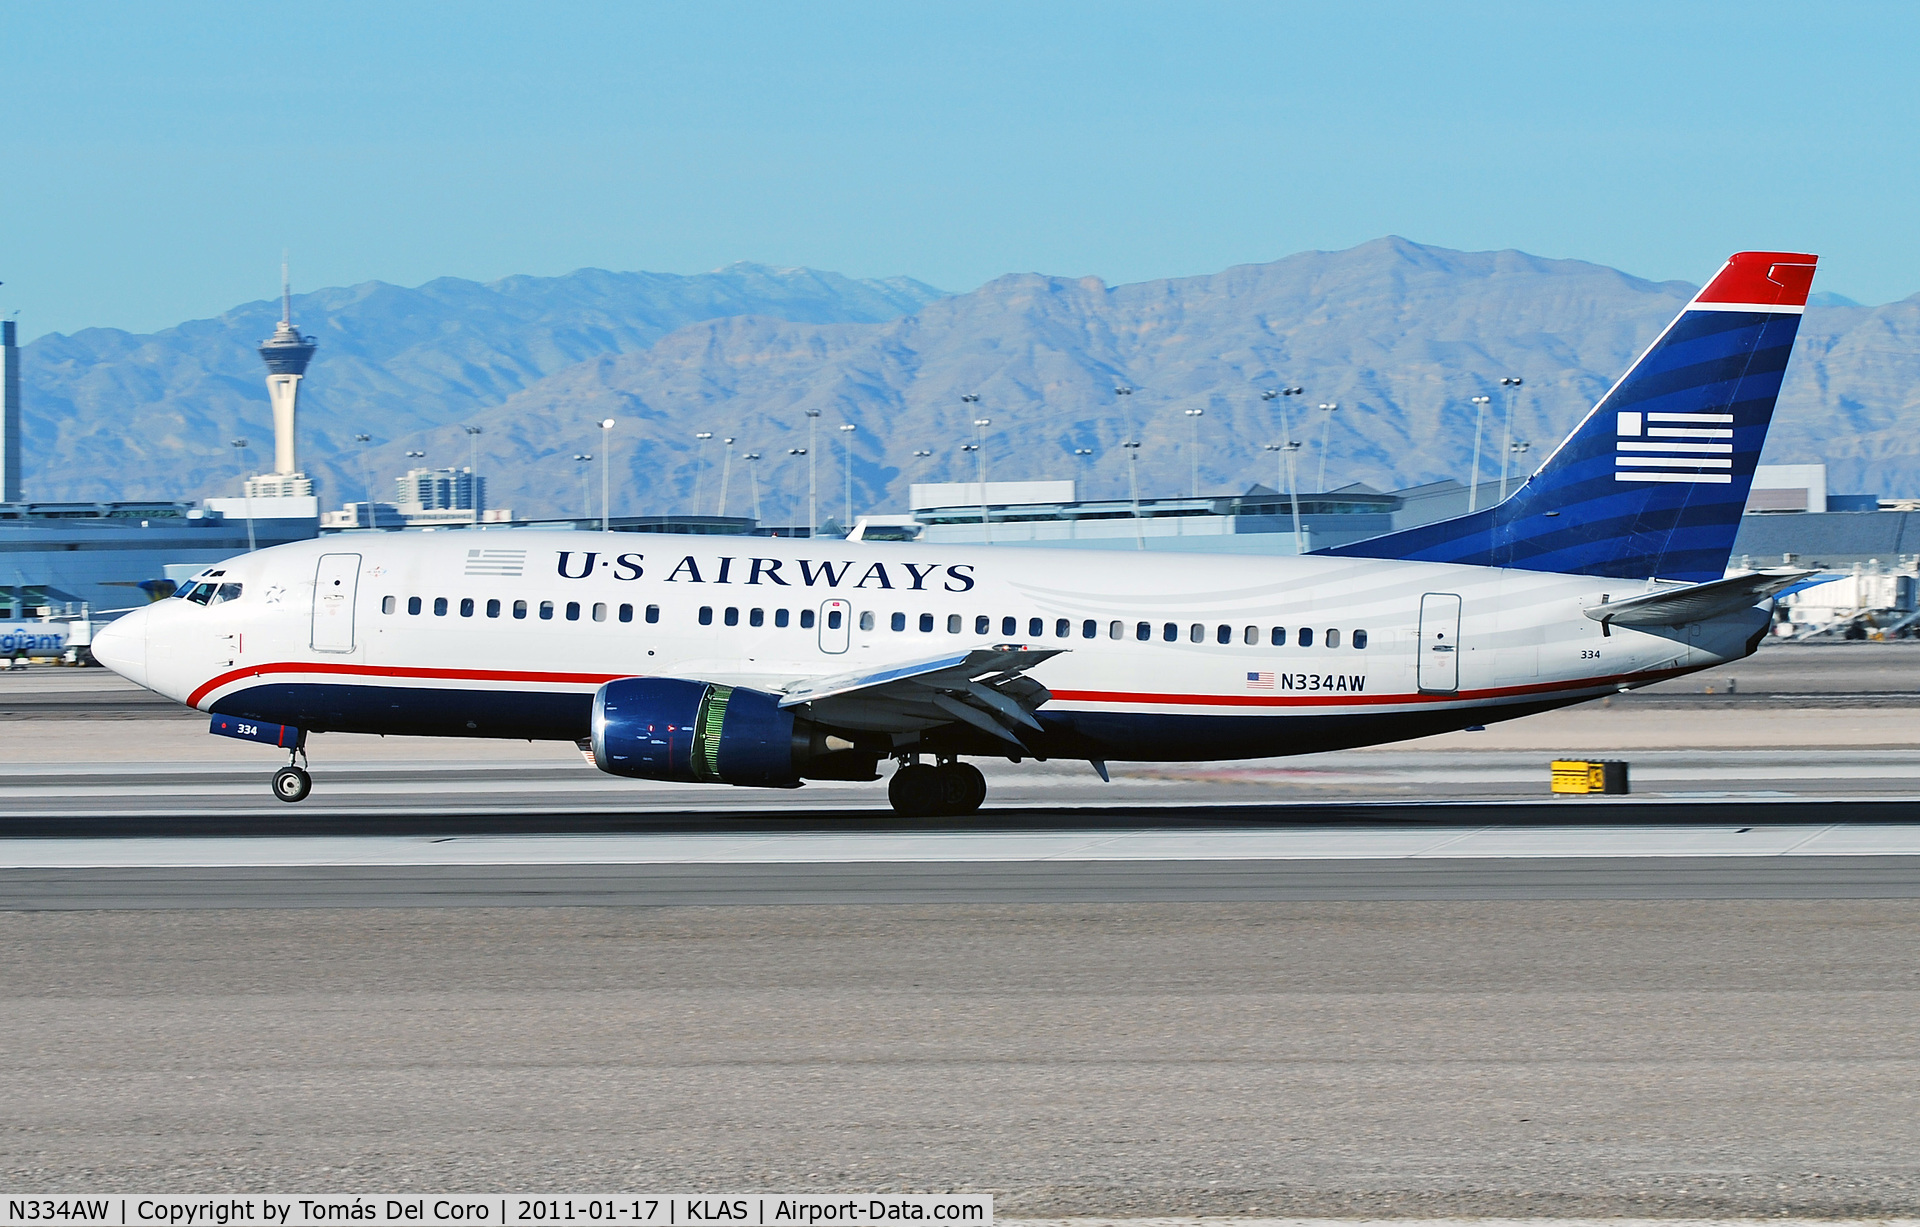 N334AW, 1987 Boeing 737-3Y0 C/N 23748, US Airways Boeing 737-3Y0 N334AW (cn 23748/1381)

Las Vegas - McCarran International (LAS / KLAS)
USA - Nevada, January 17, 2011
Photo: Tomas Del Coro